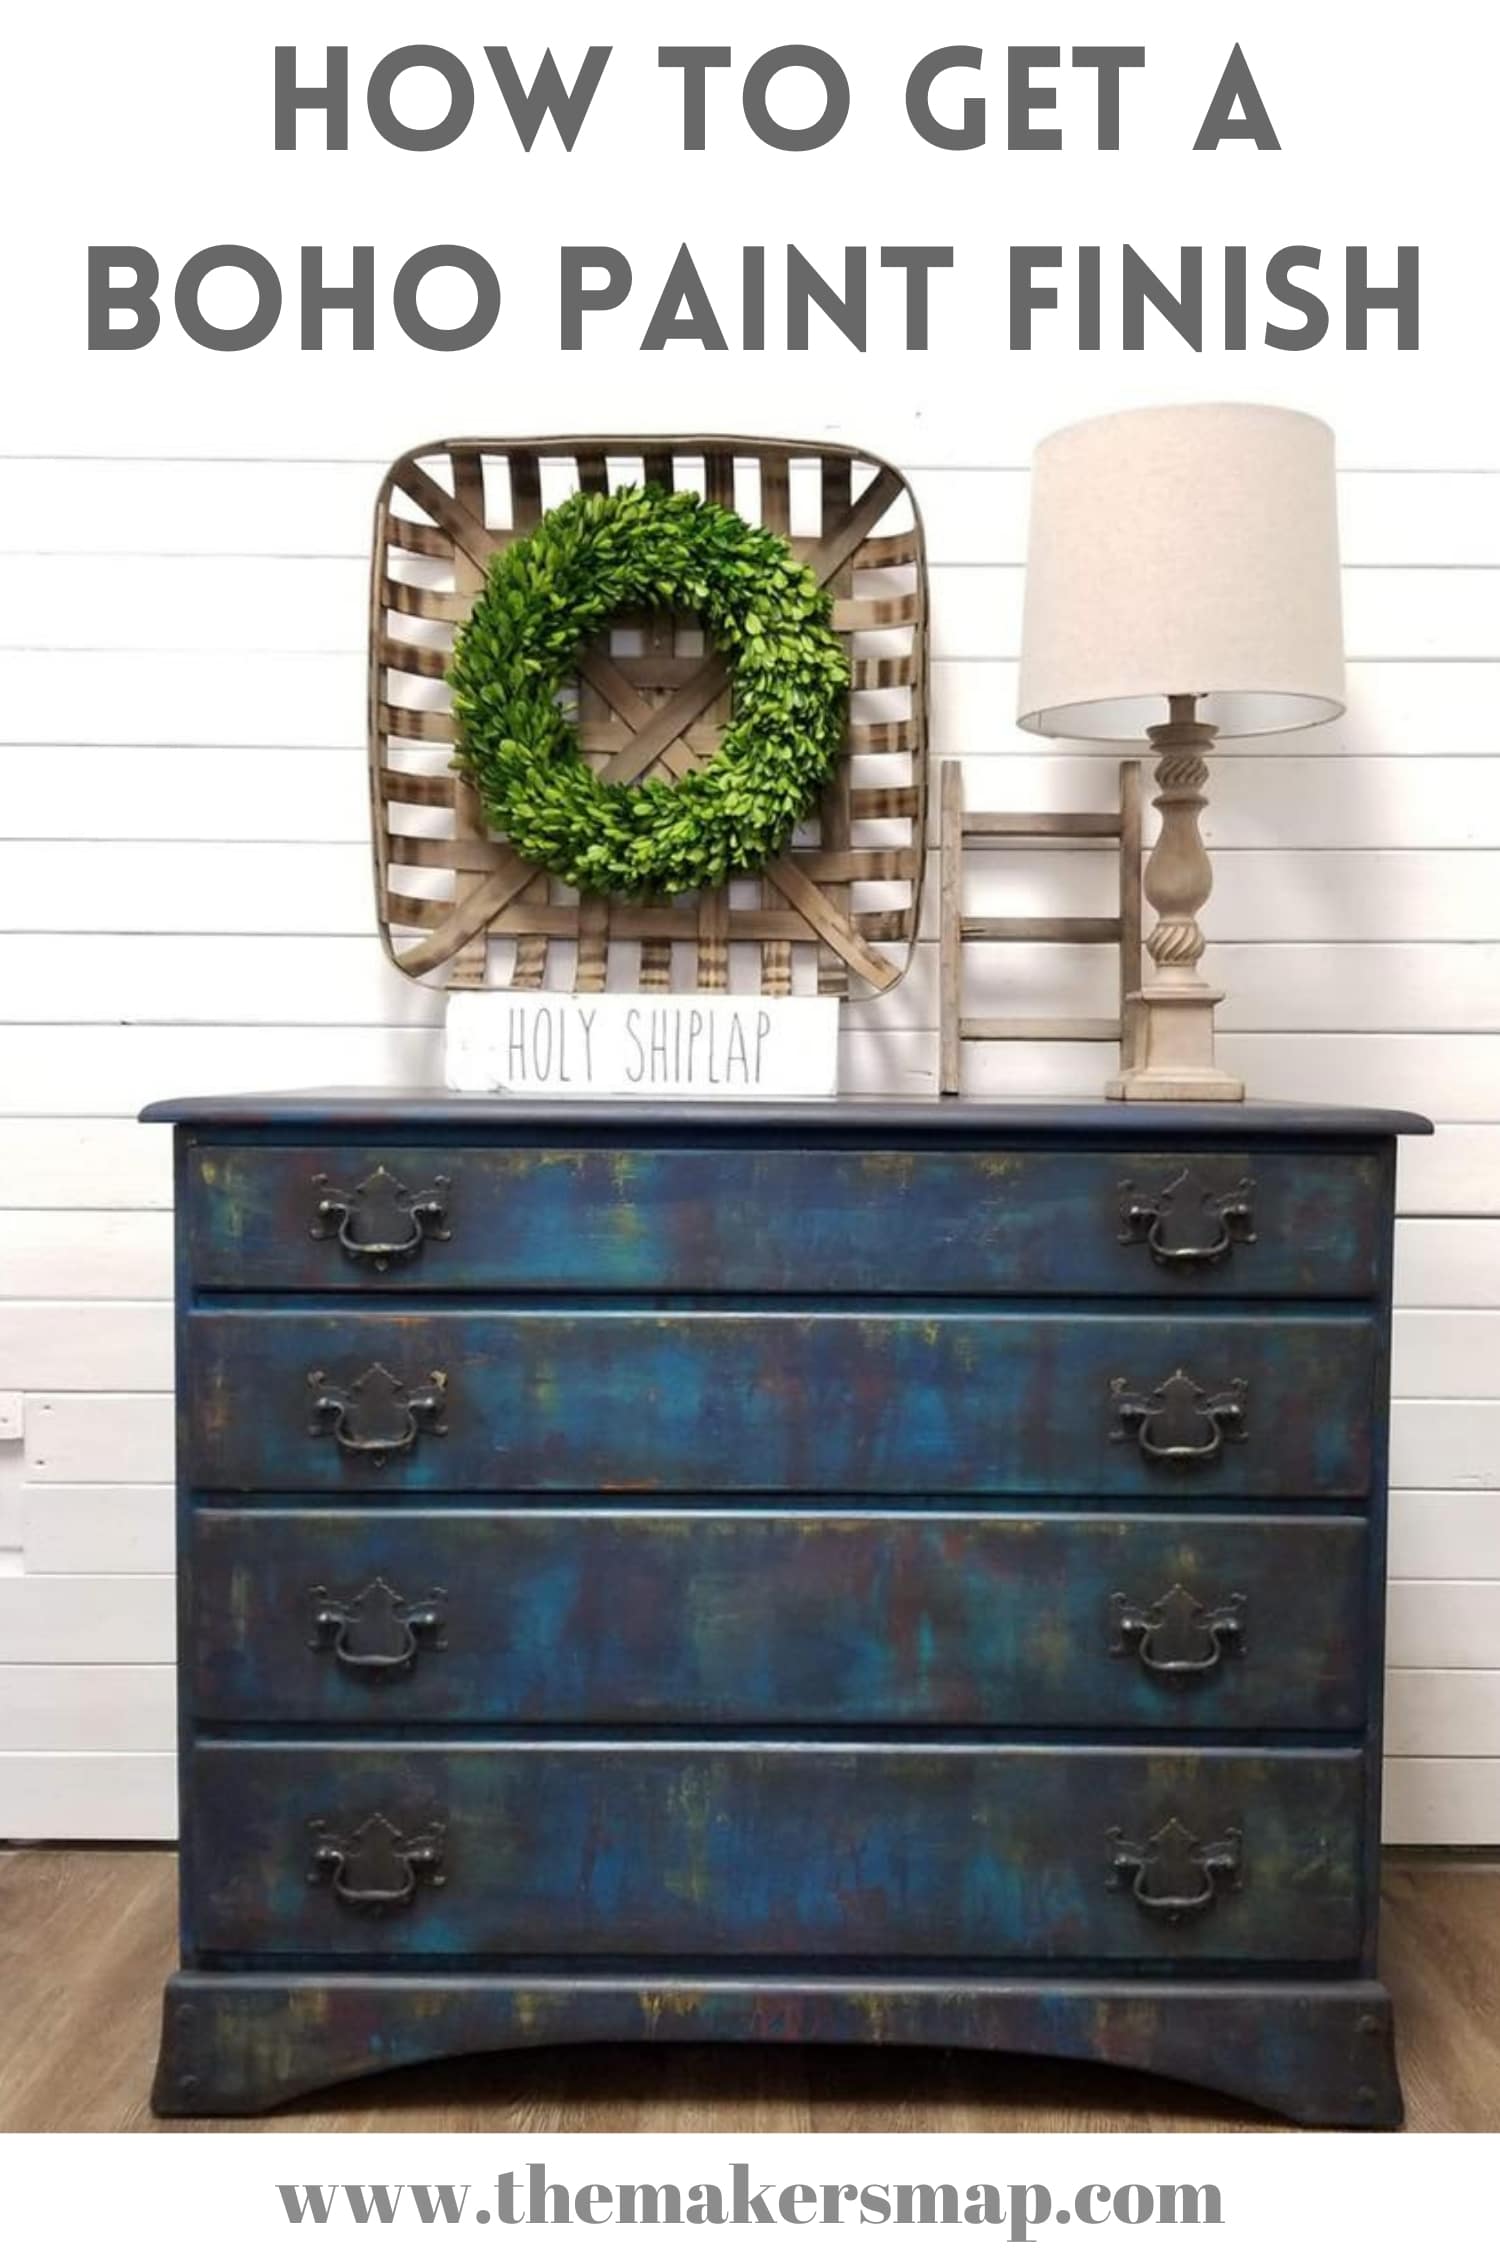 Beautiful dresser. : r/FurniturePainting